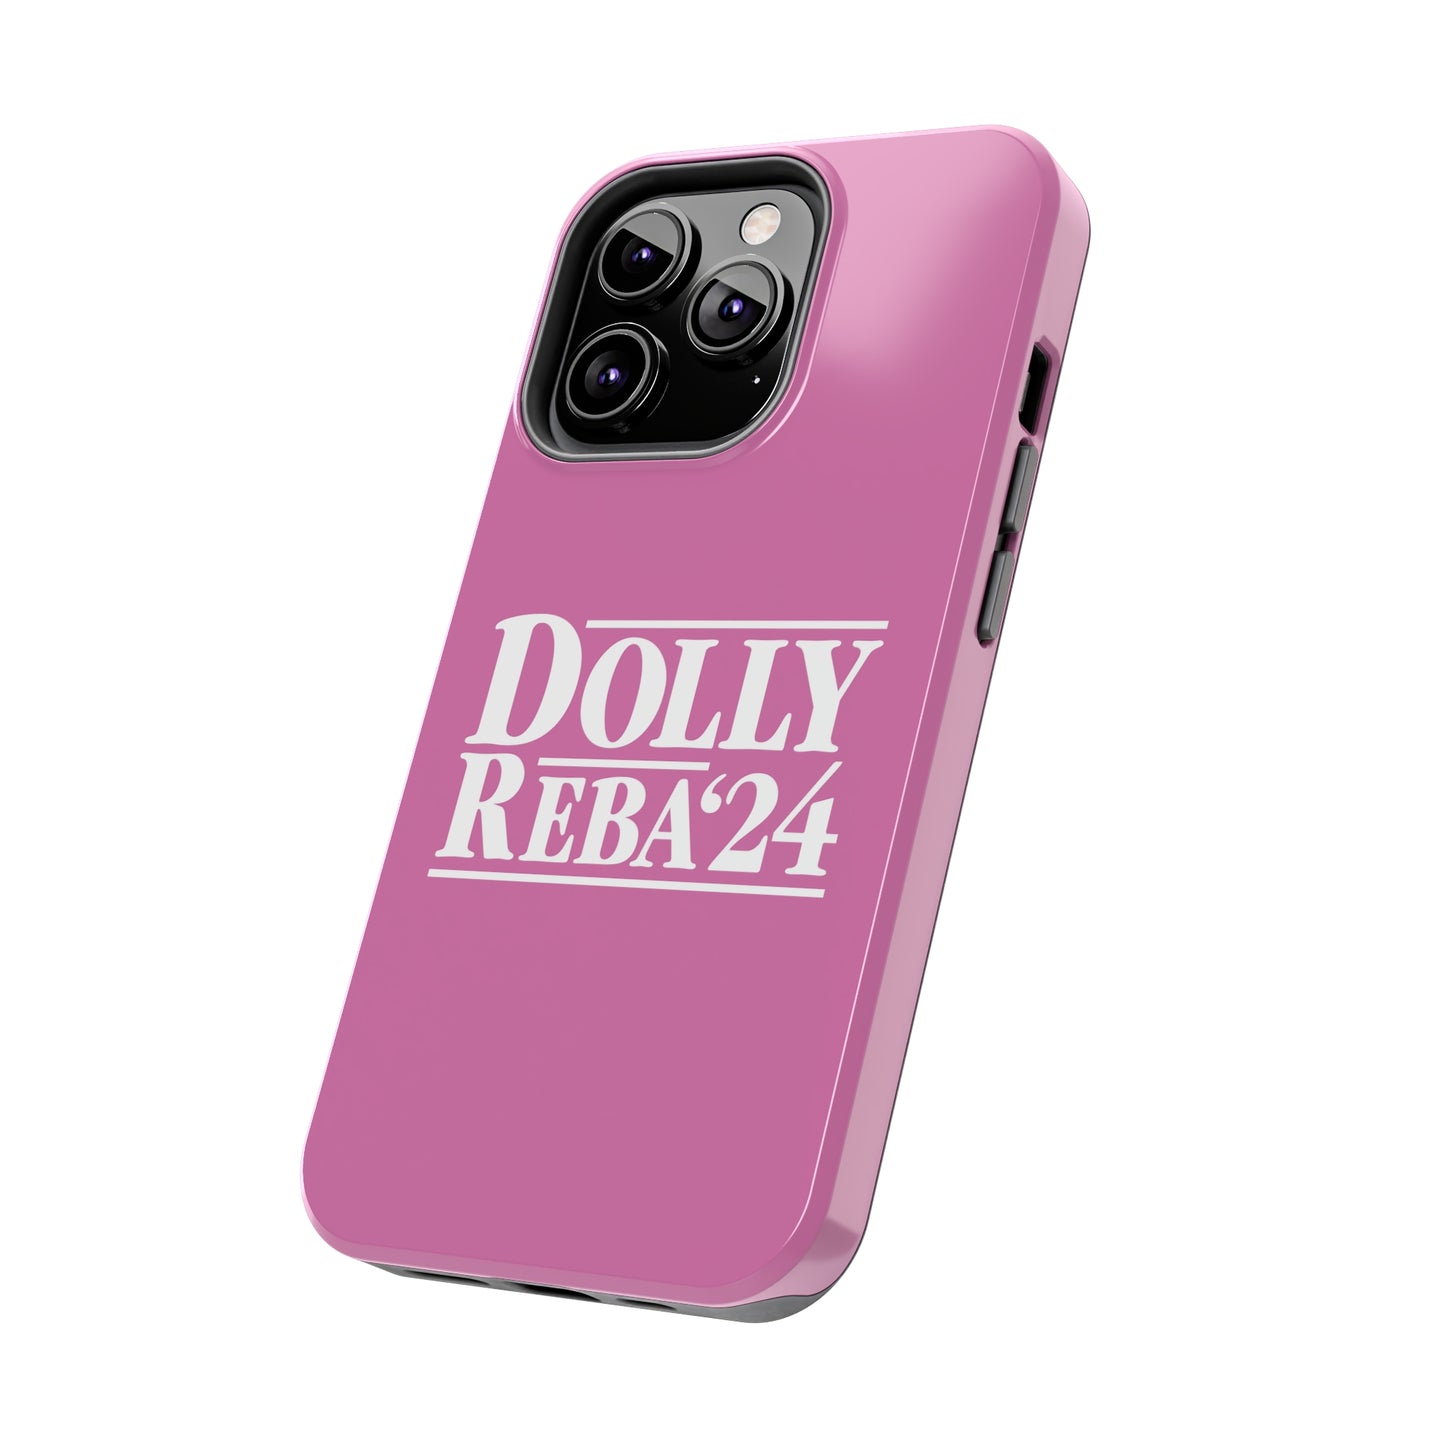 Dolly/Reba' 24 Phone Cases